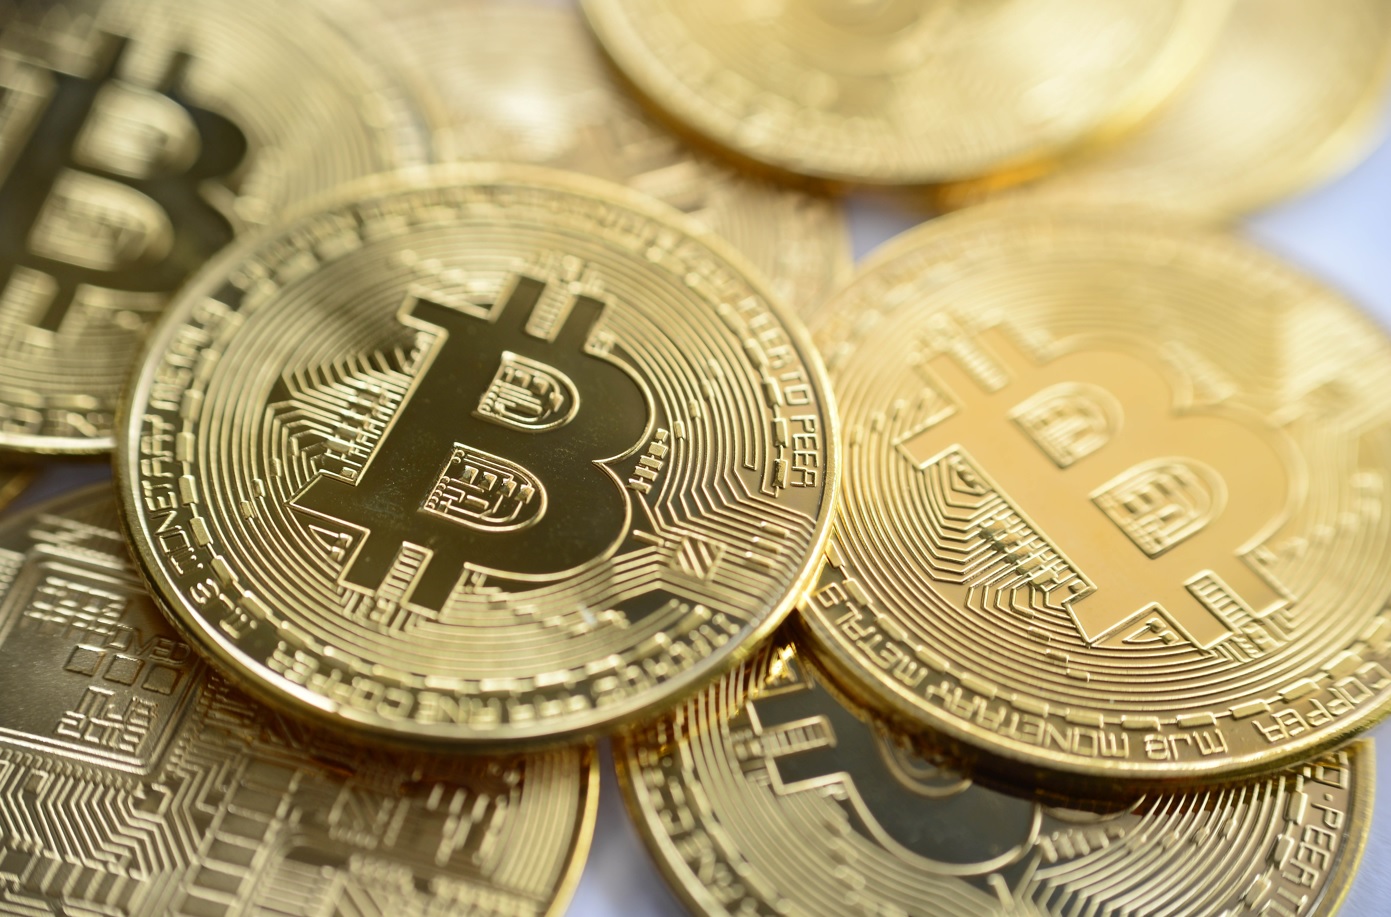  bitcoin shows abating signs market below crypto 